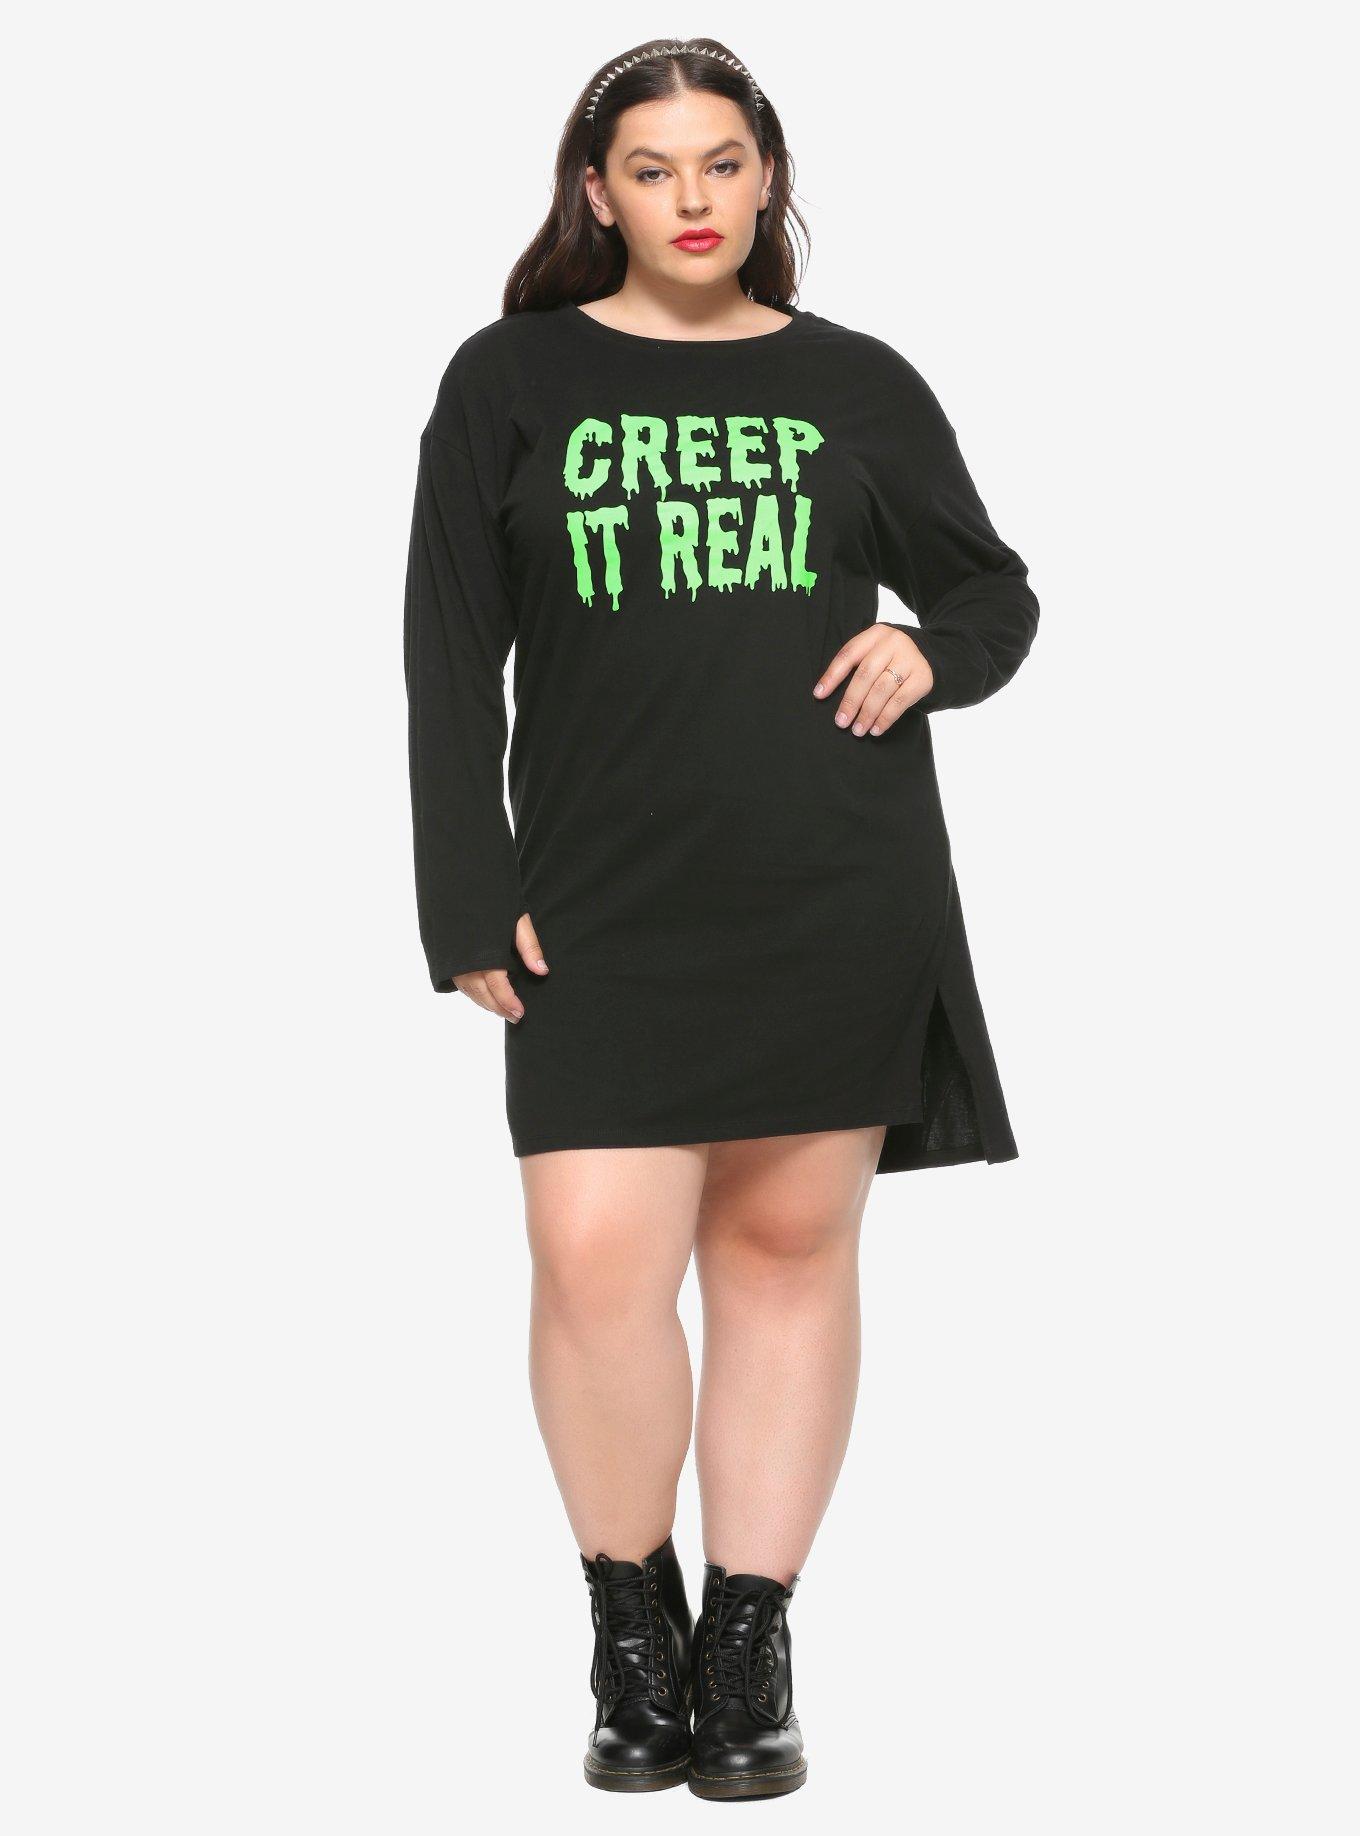 Creep It Real Long-Sleeve T-Shirt Dress Plus Size, , alternate